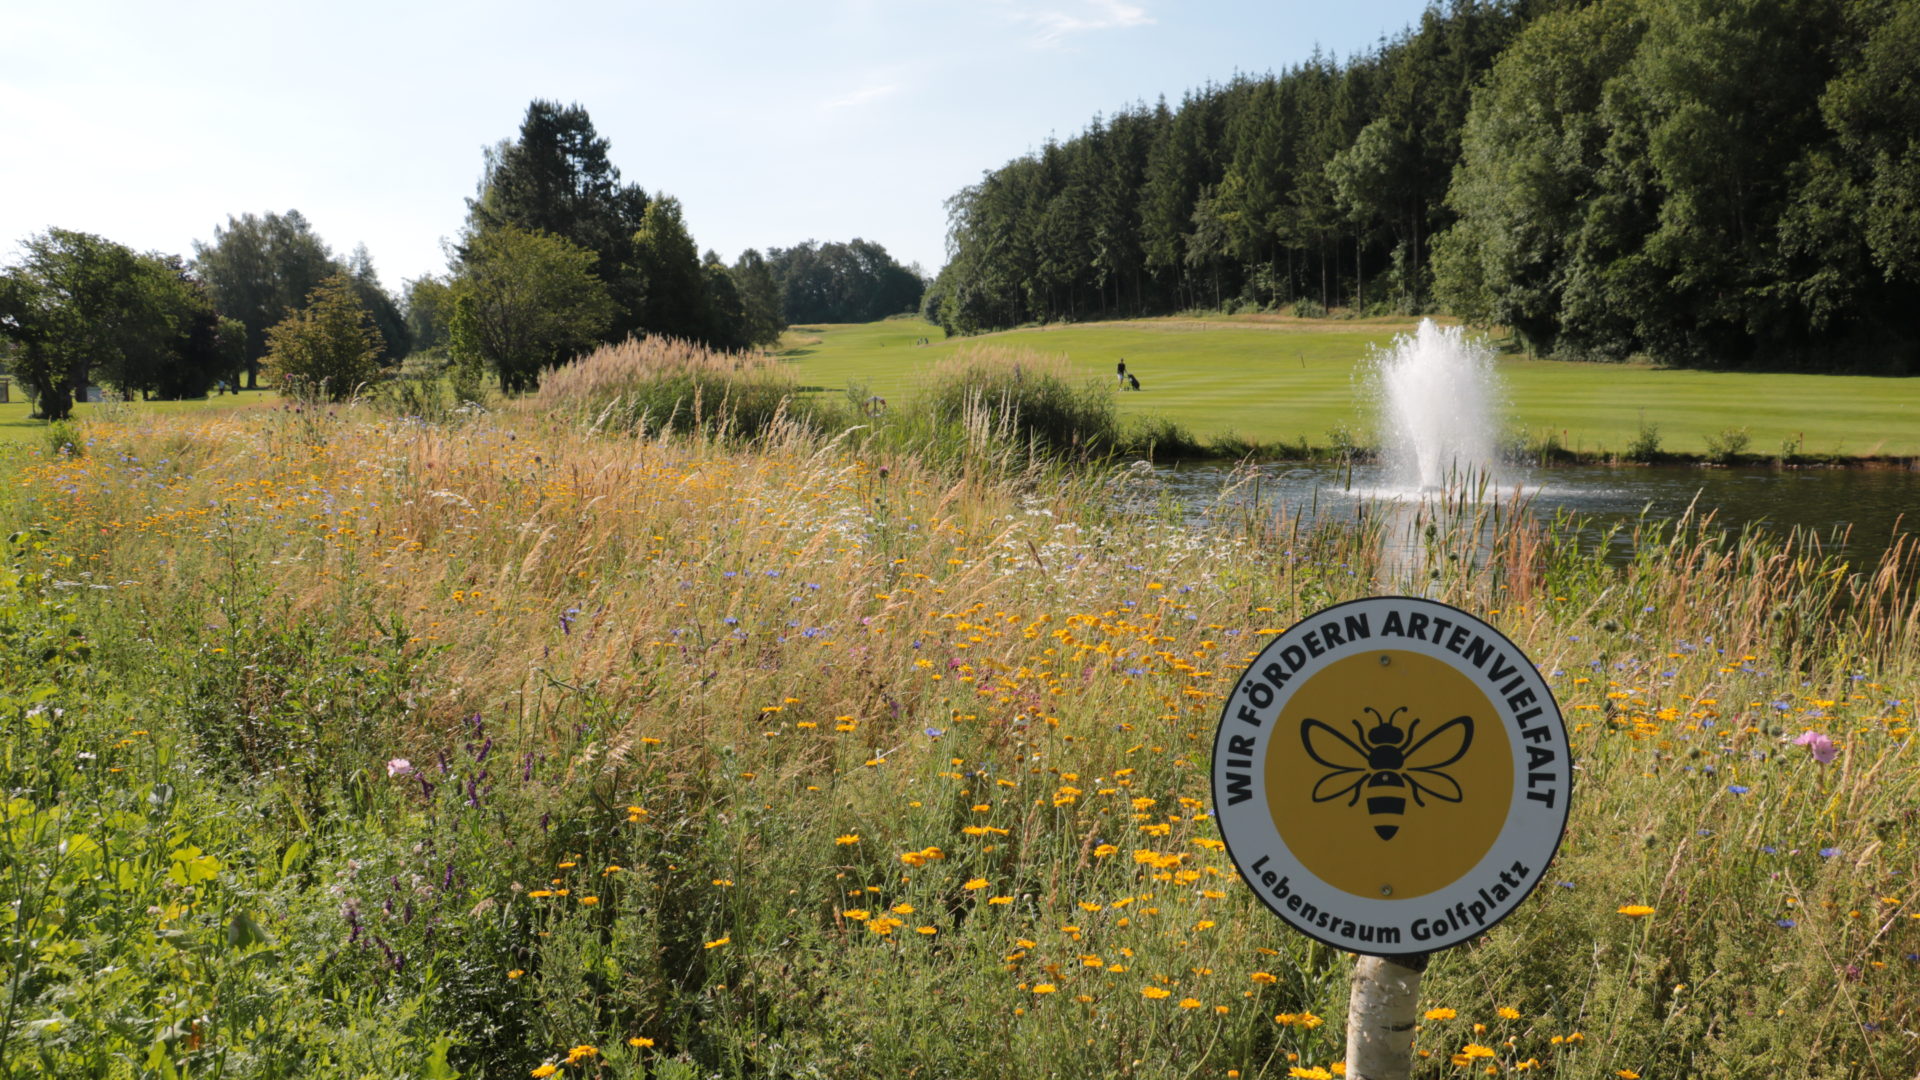 Lebensraum Golfplatz – Wir fördern Artenvielfalt. (Foto: BWGV)